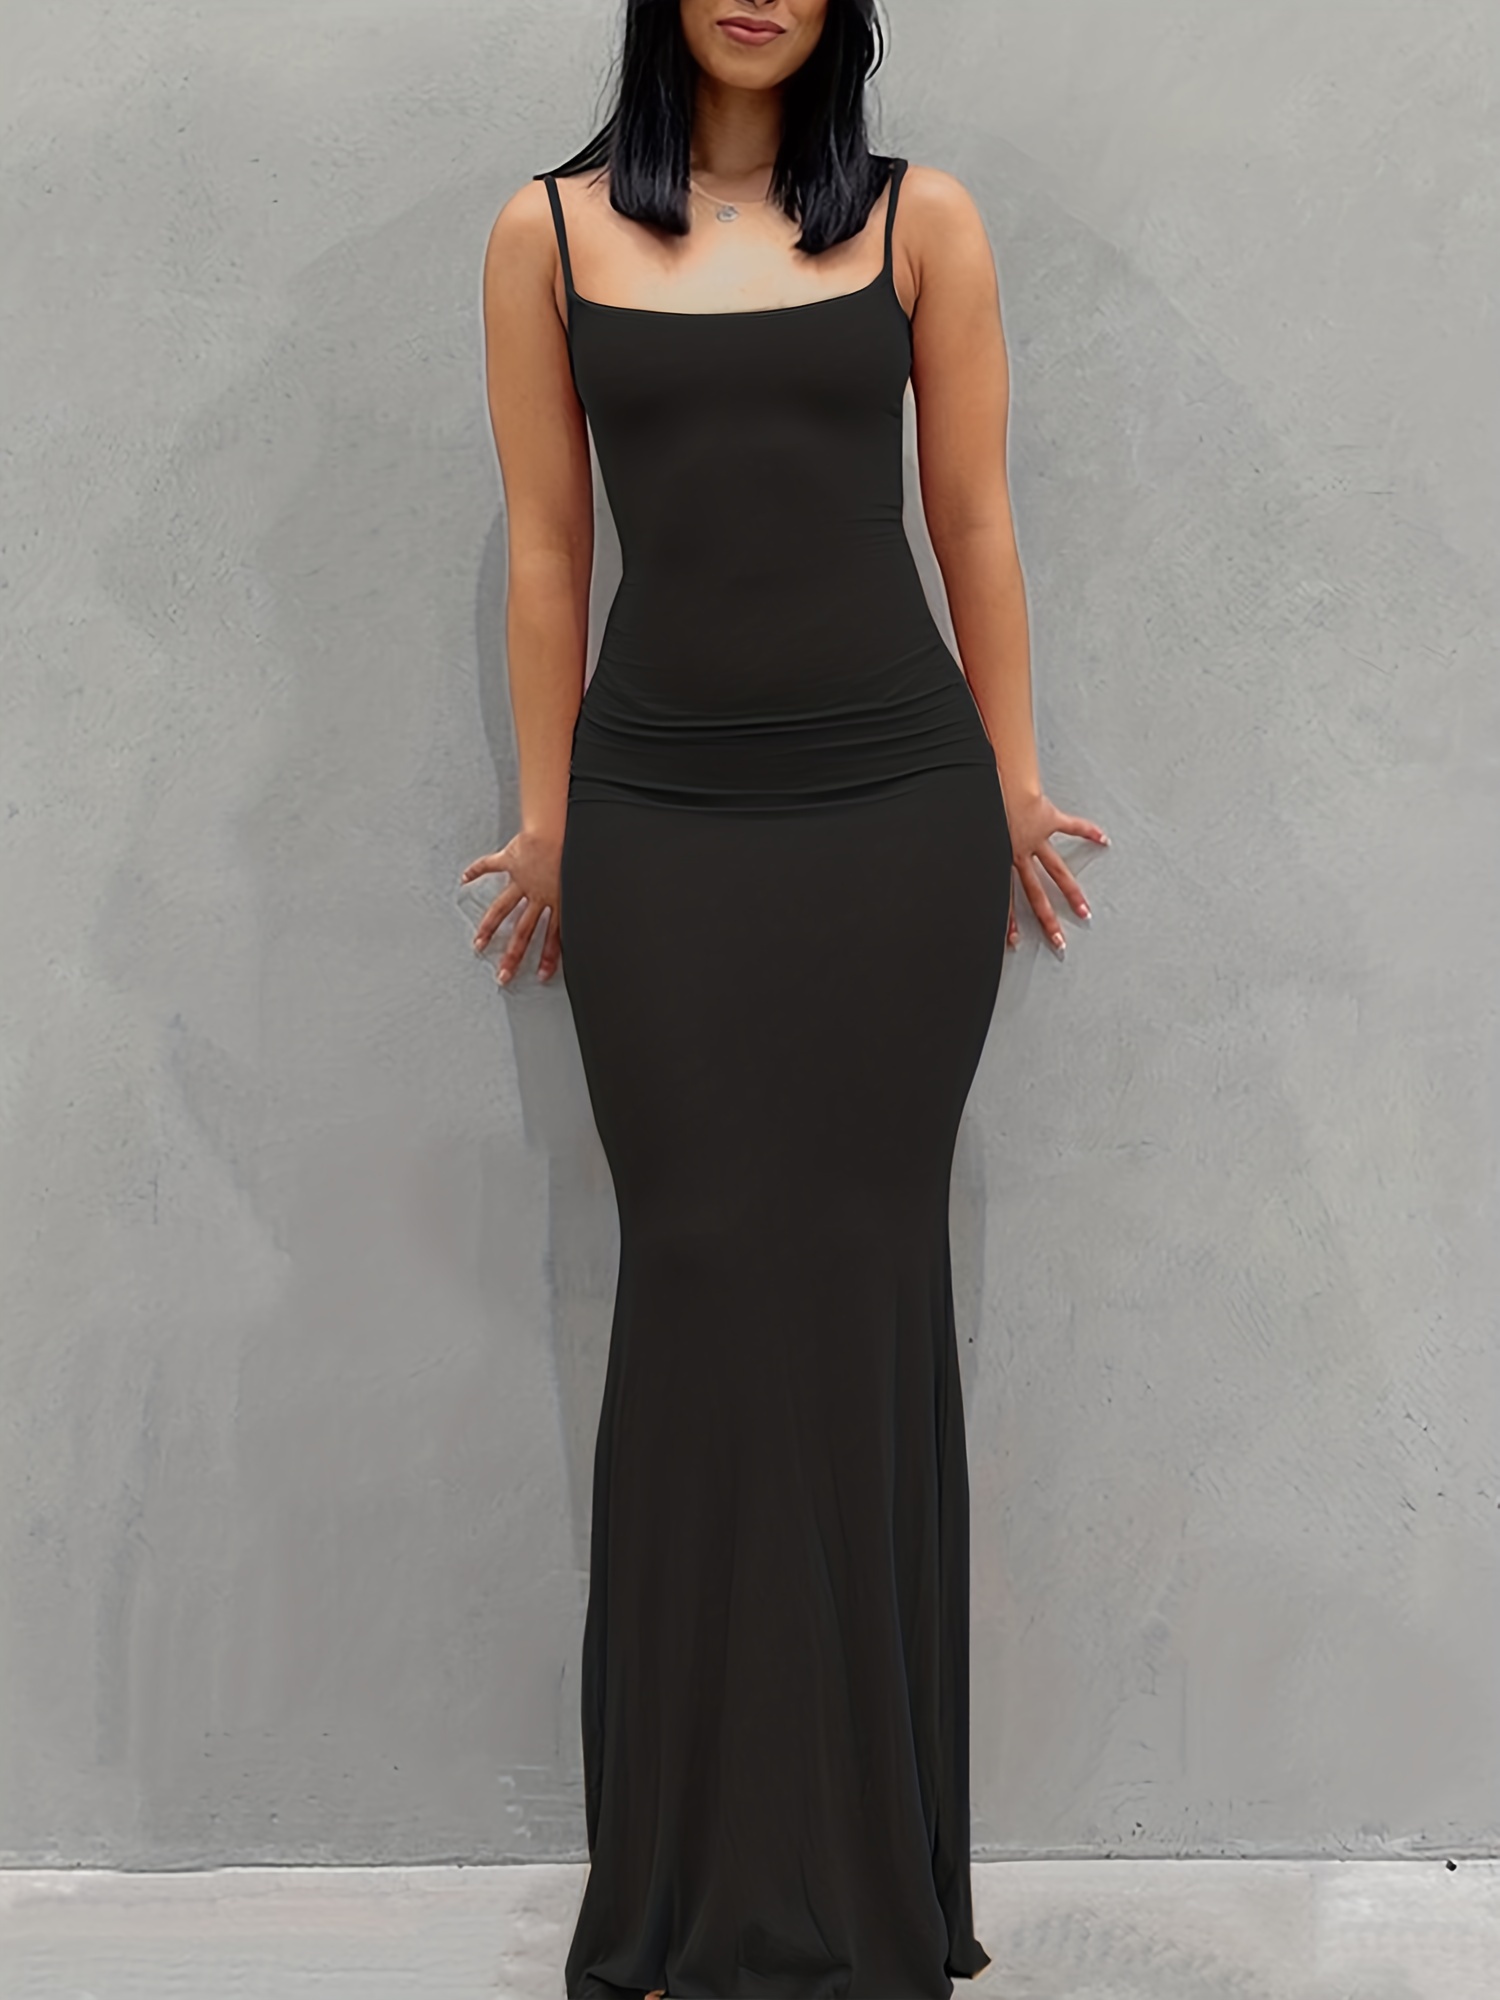 Black Halter Backless Maxi Dress/maxi Dress for Women/slit Sexy Evening  Party Dress/sleeveless Maxi Dress/evening Dress/summer Dress 